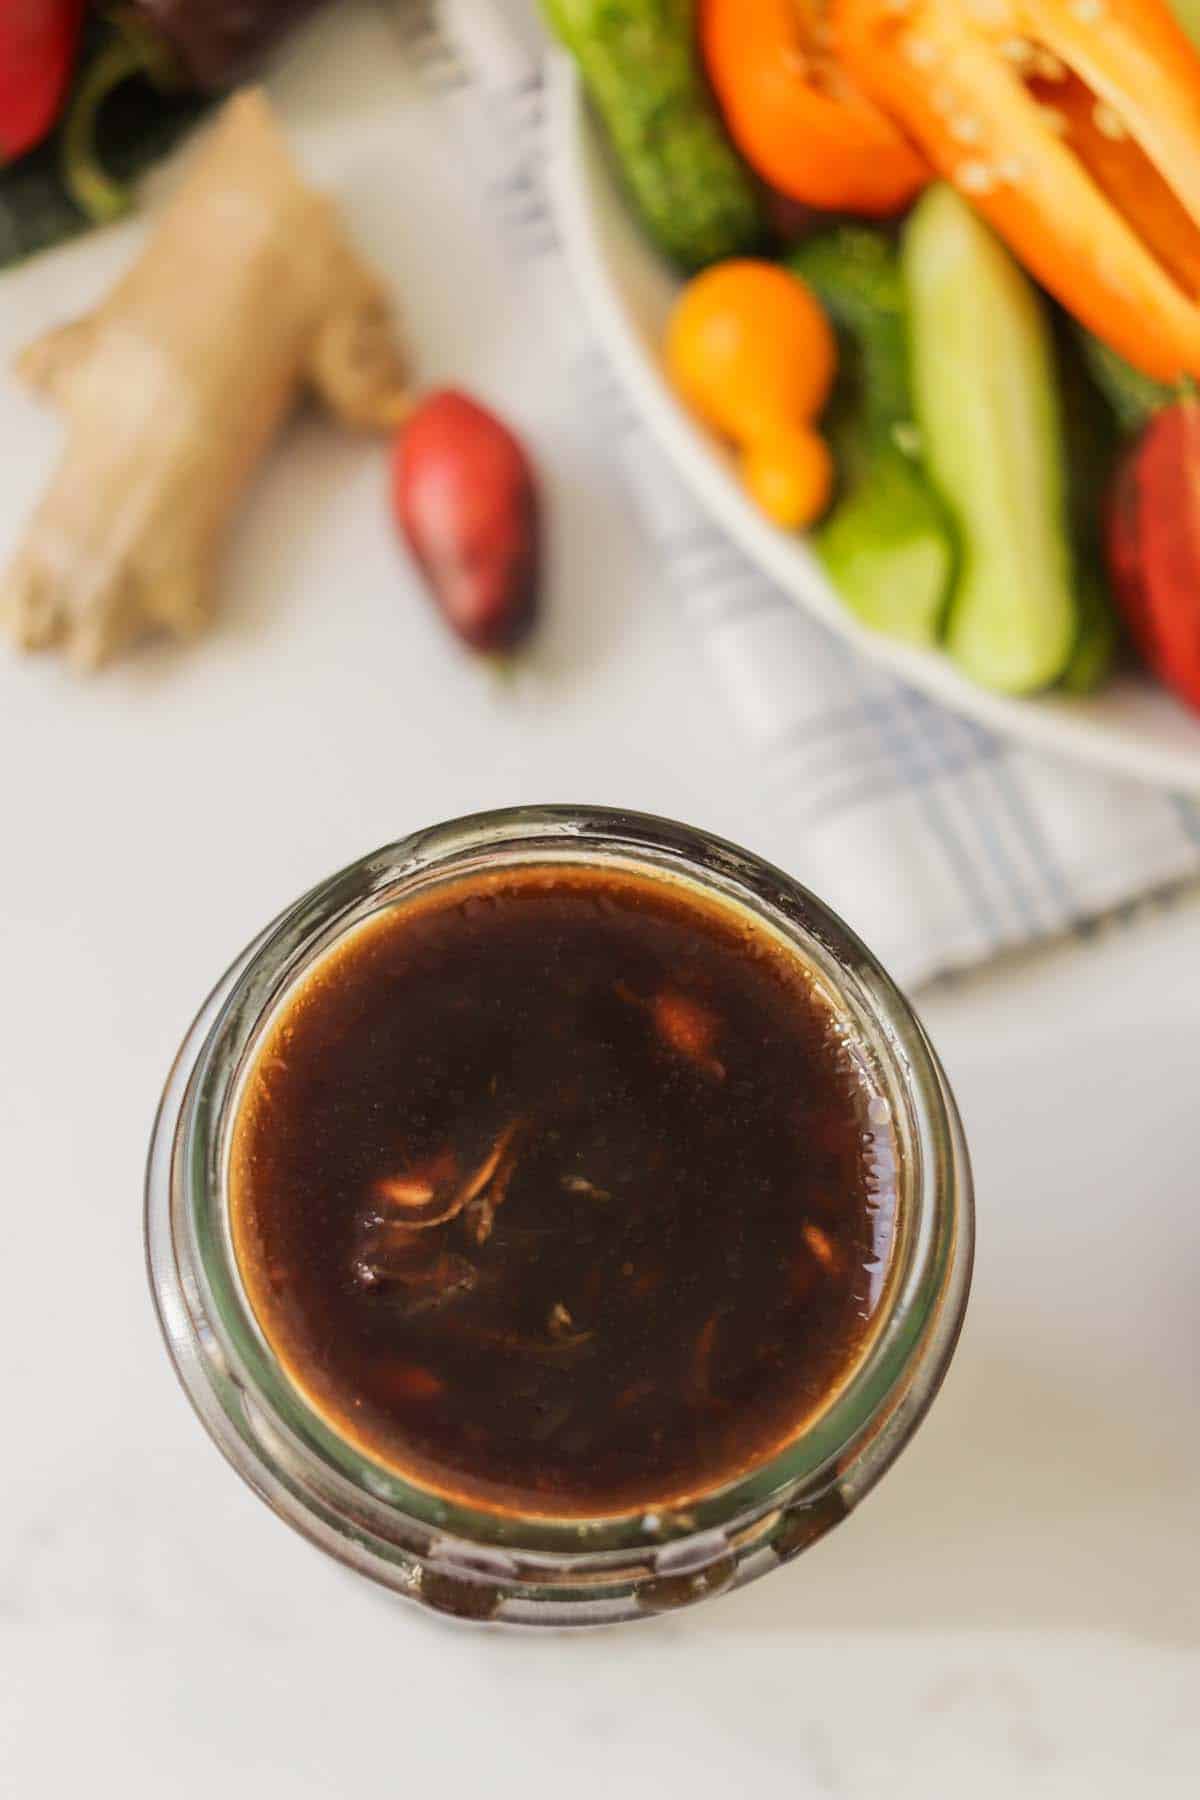 Sauce in a glass jar.